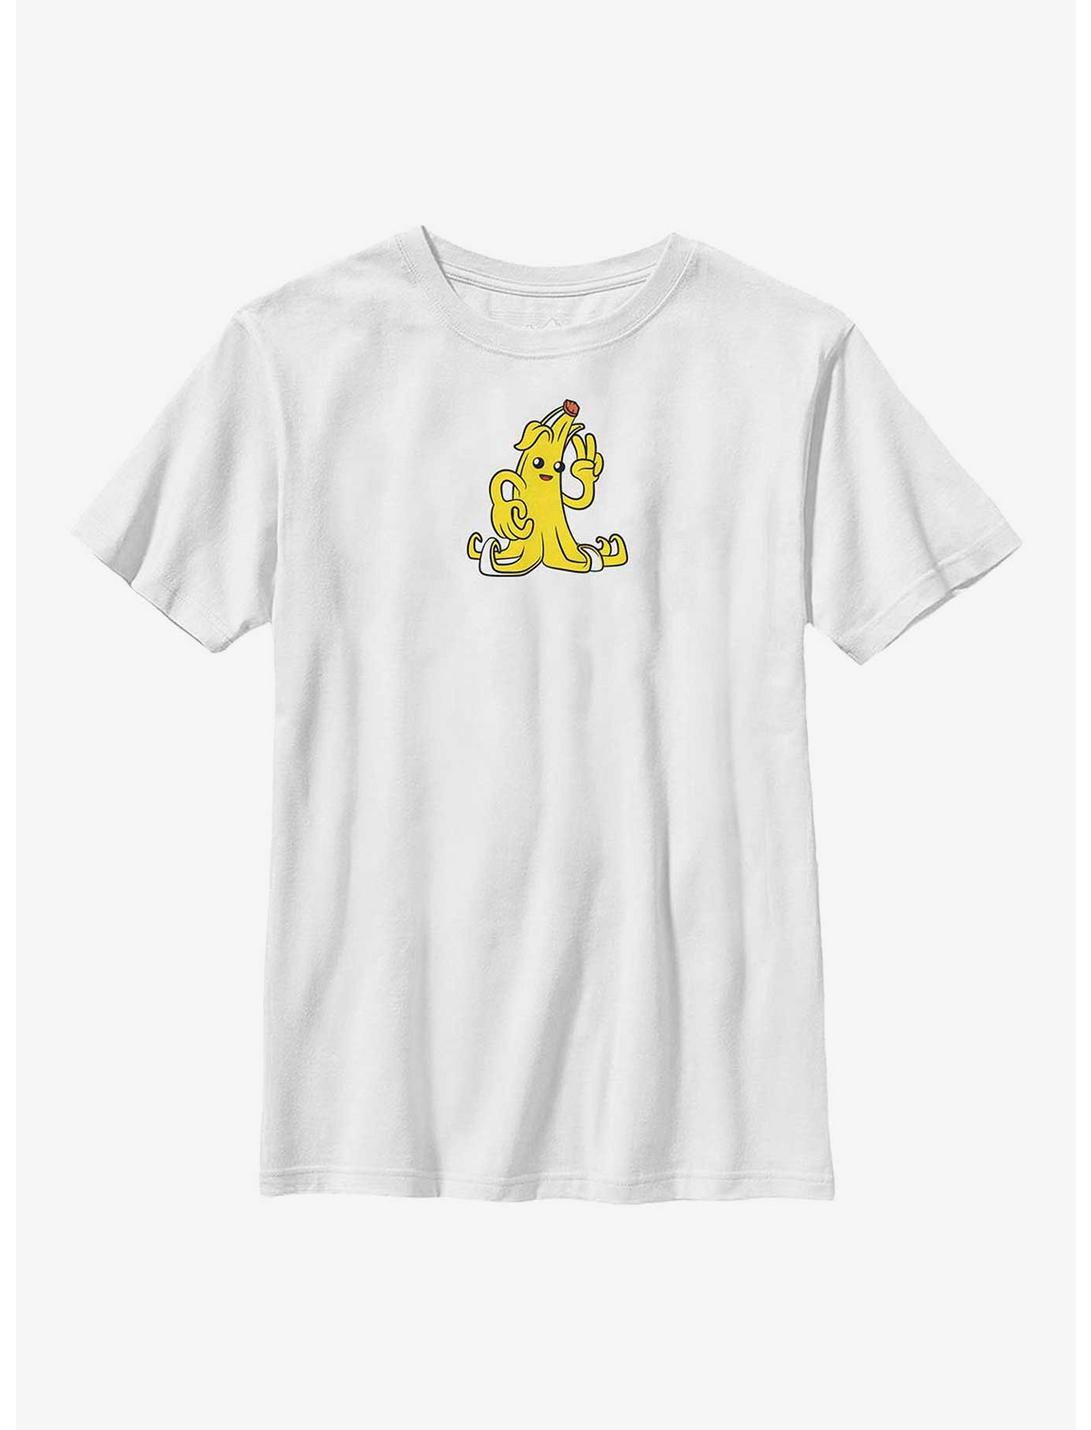 Fortnite Peely Banana Peace Youth T-Shirt, WHITE, hi-res